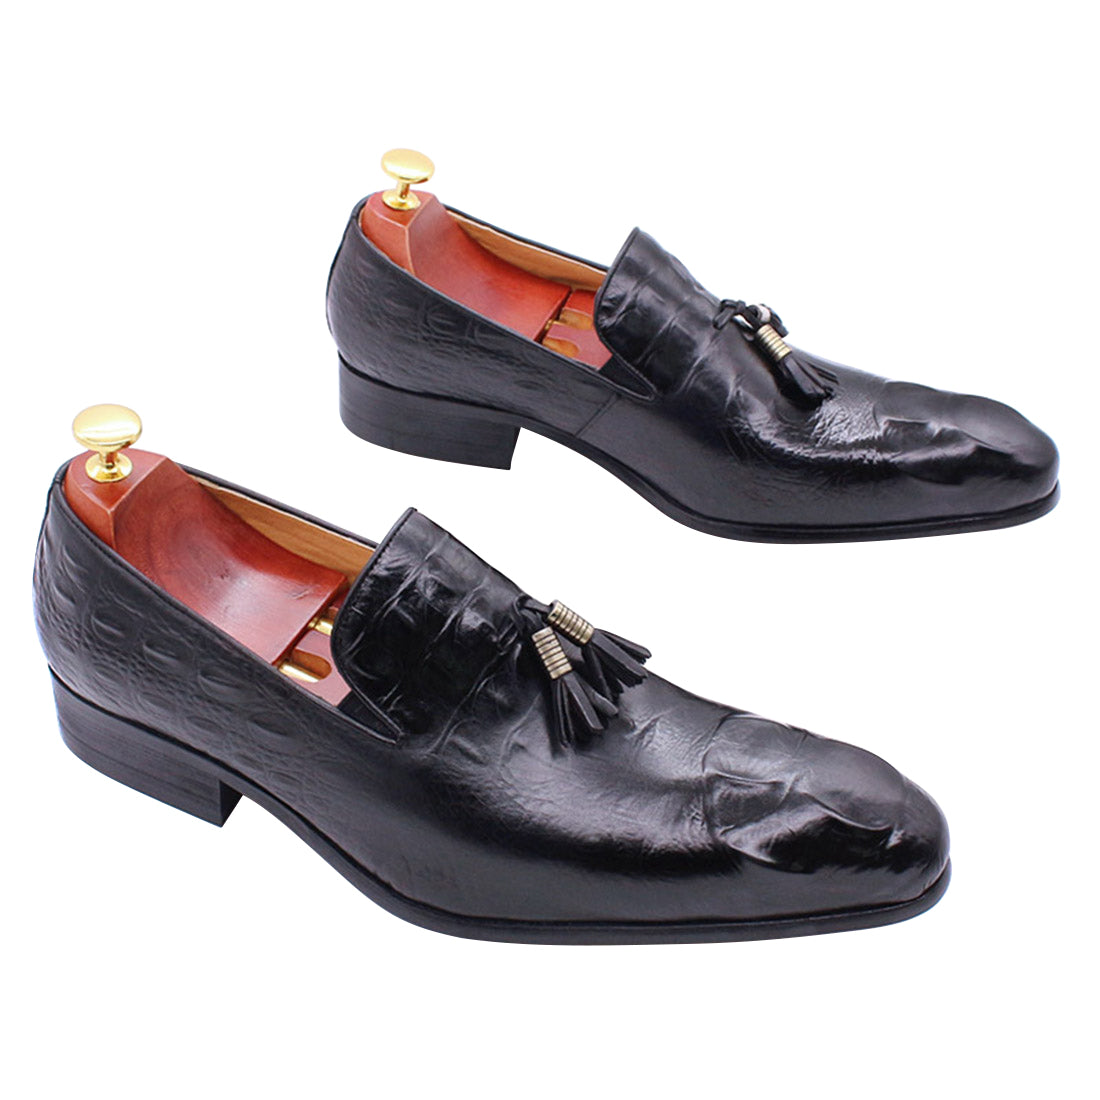 Men's Dress Formal Tassel Loafers Tuxedo Shoes